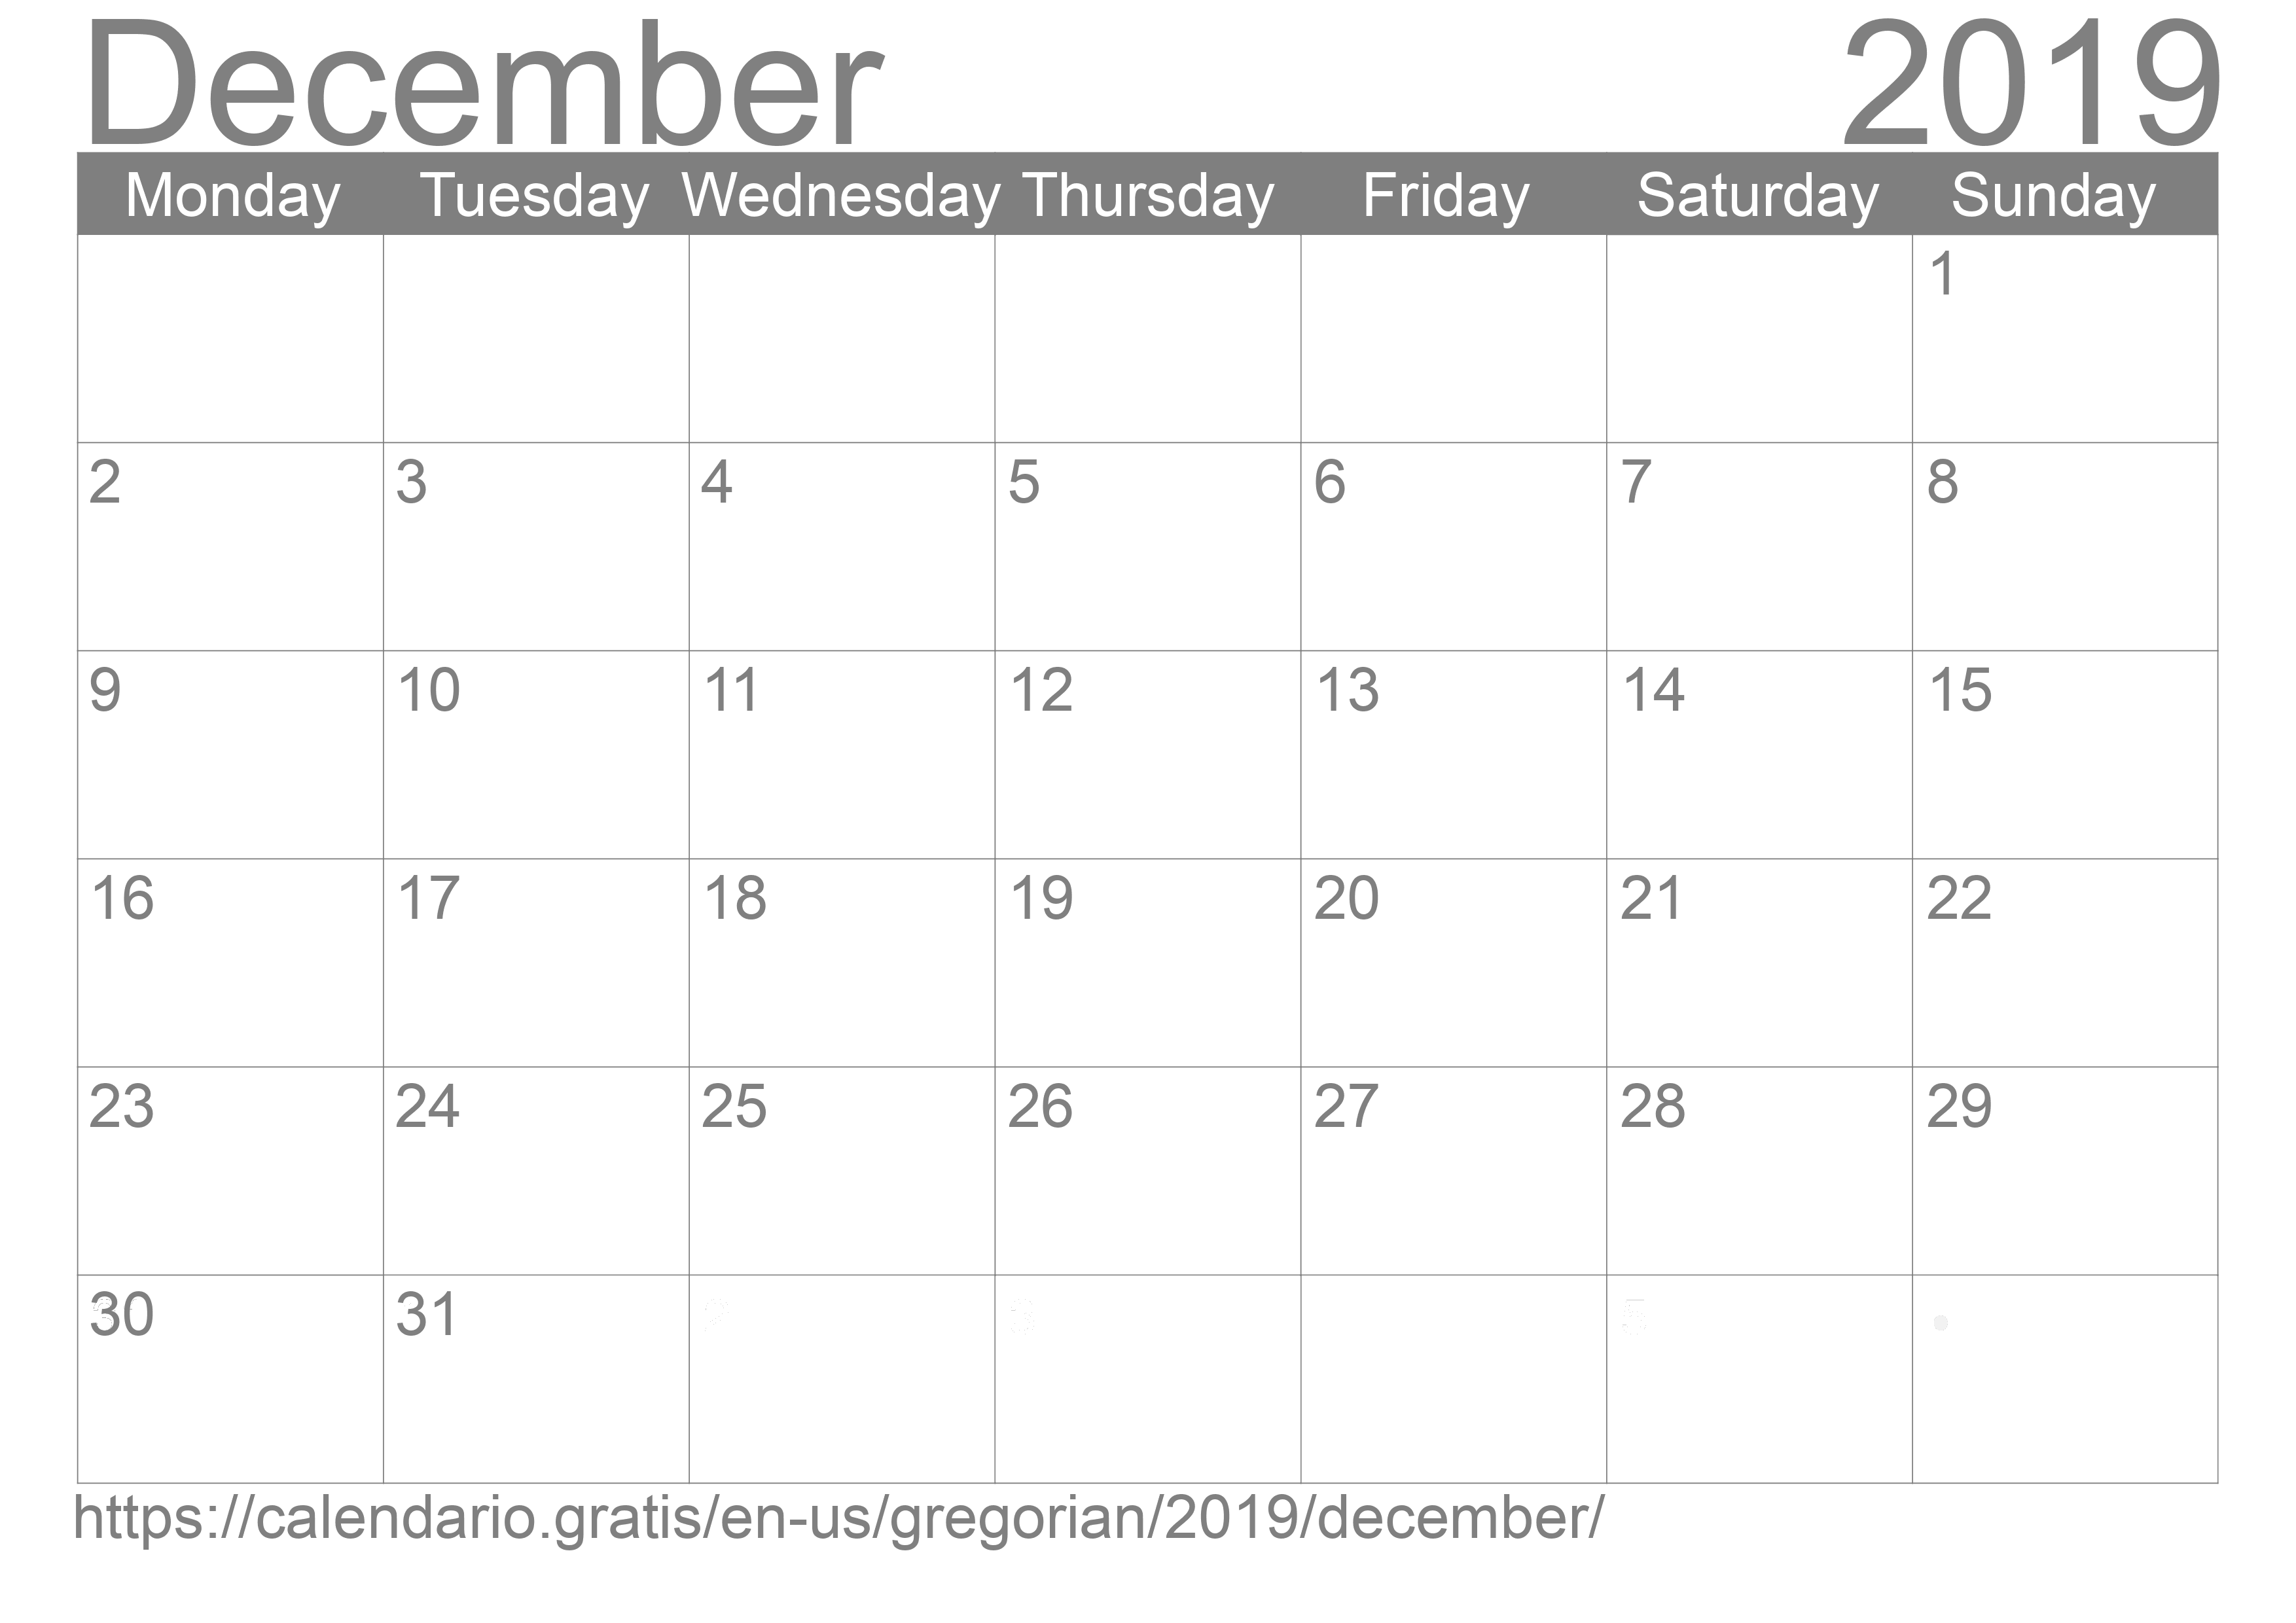 Calendar December 2019 to print